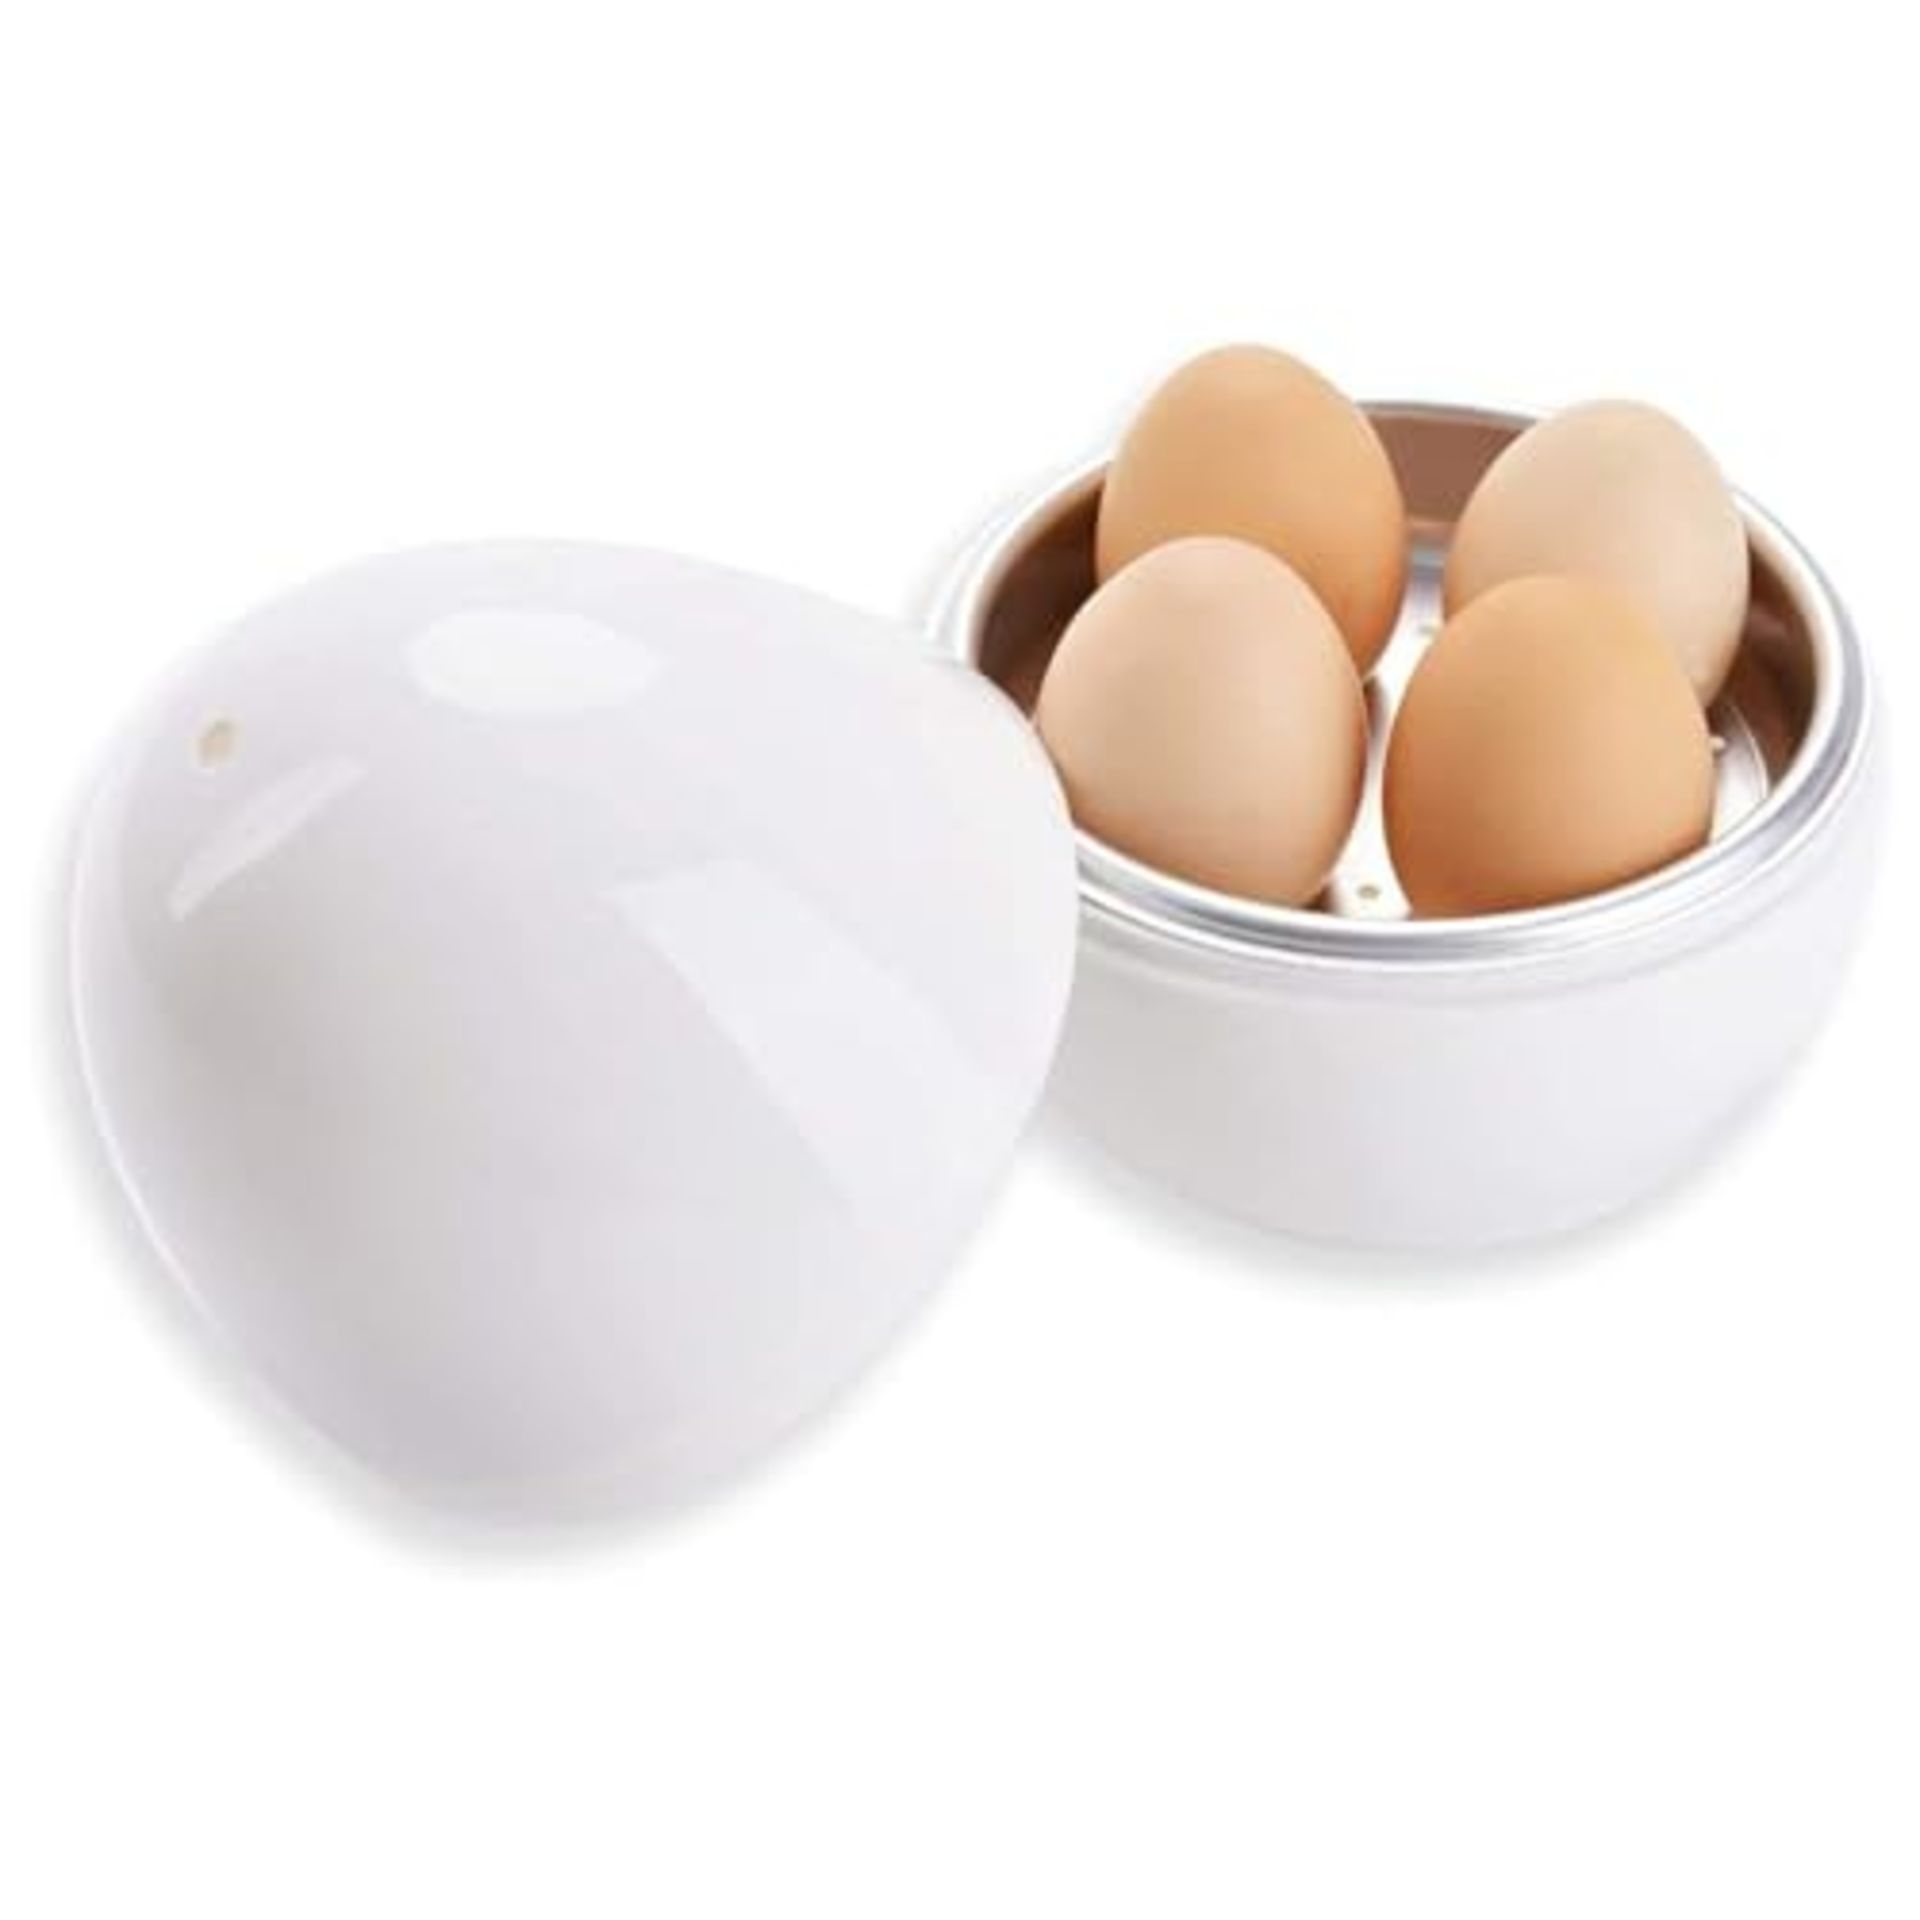 Microwave Egg Boiler for 4 Eggs Poachers Boiled Egg Cooker Microwave only 8 Minutes for Hard Soft B